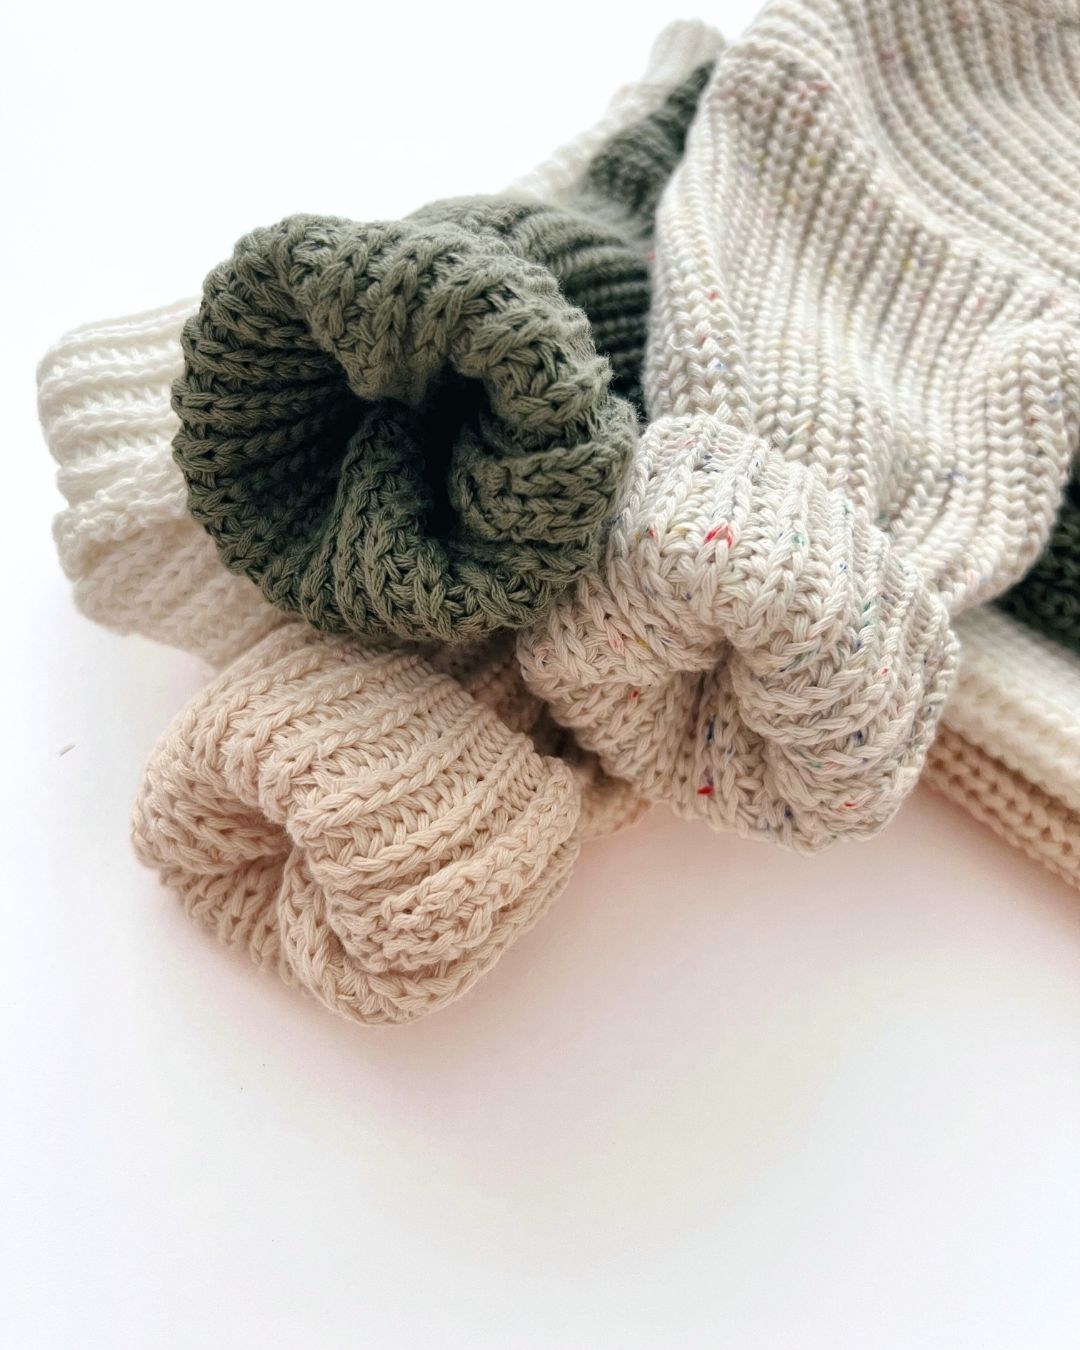 Chunky Knit Sweater | Confetti